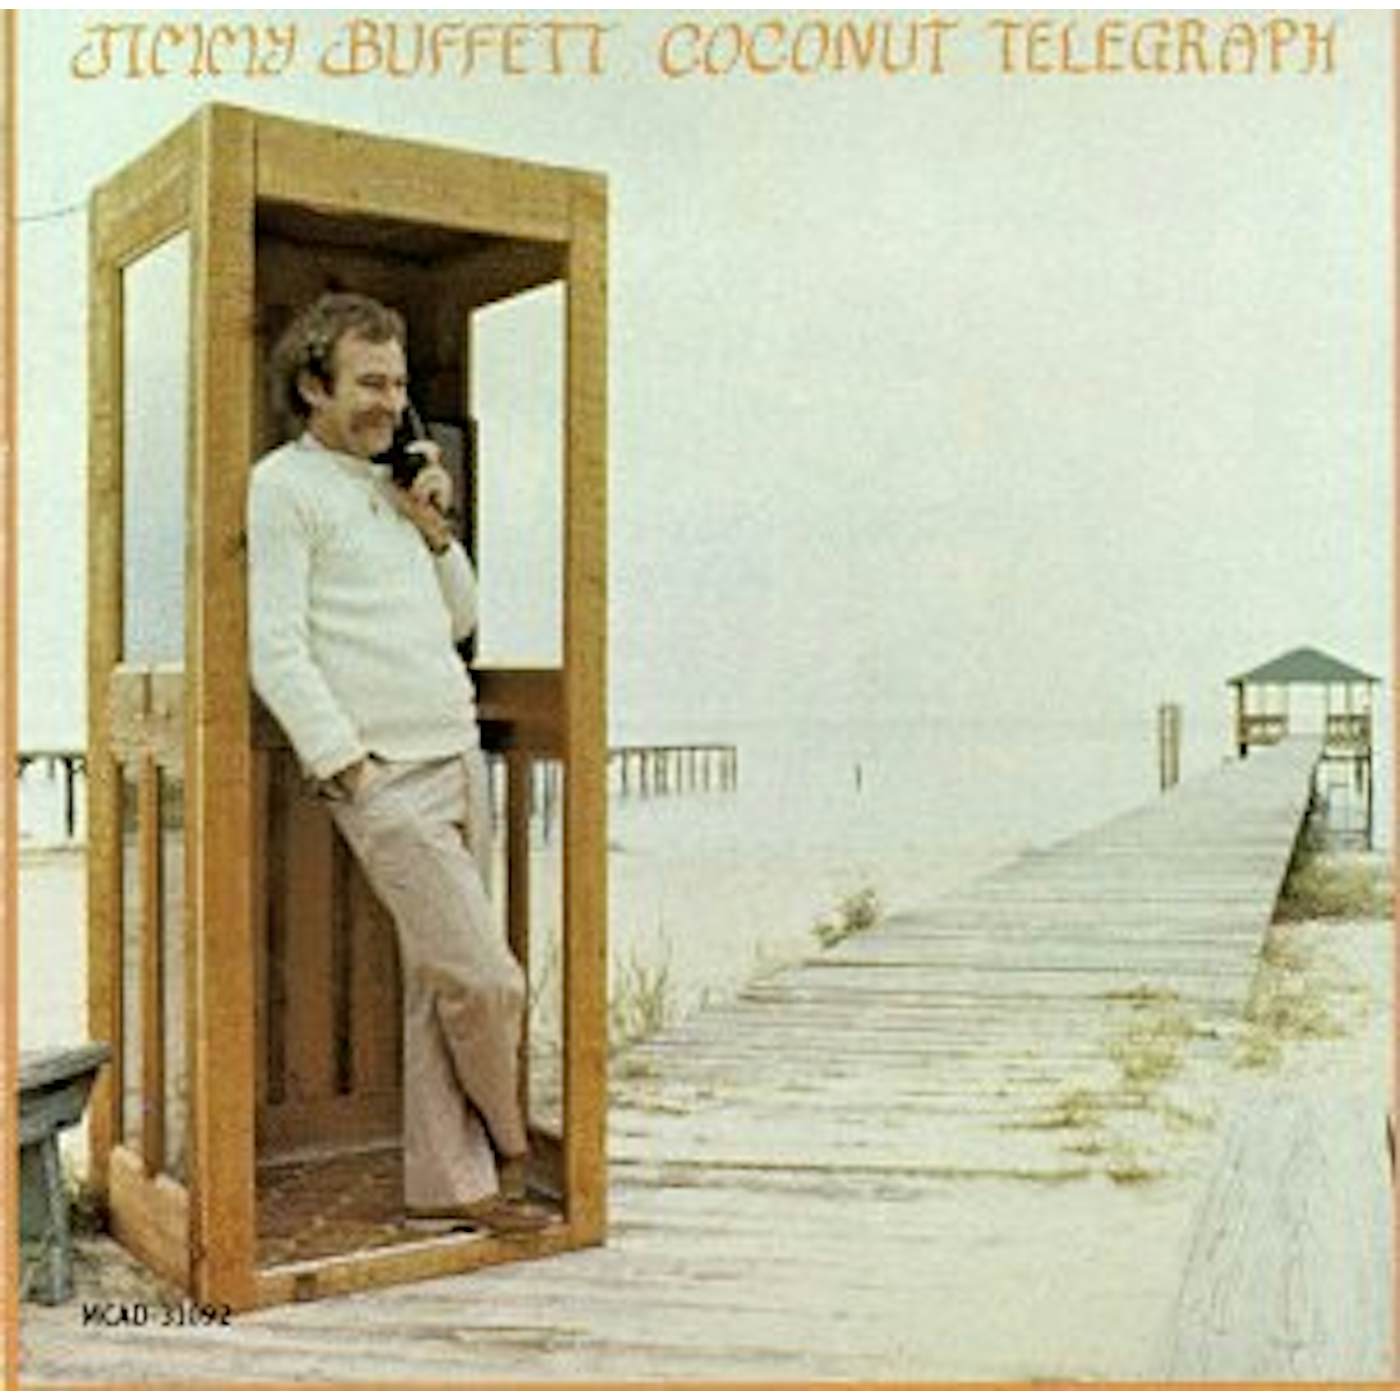 Jimmy Buffett COCONUT TELEGRAPH CD